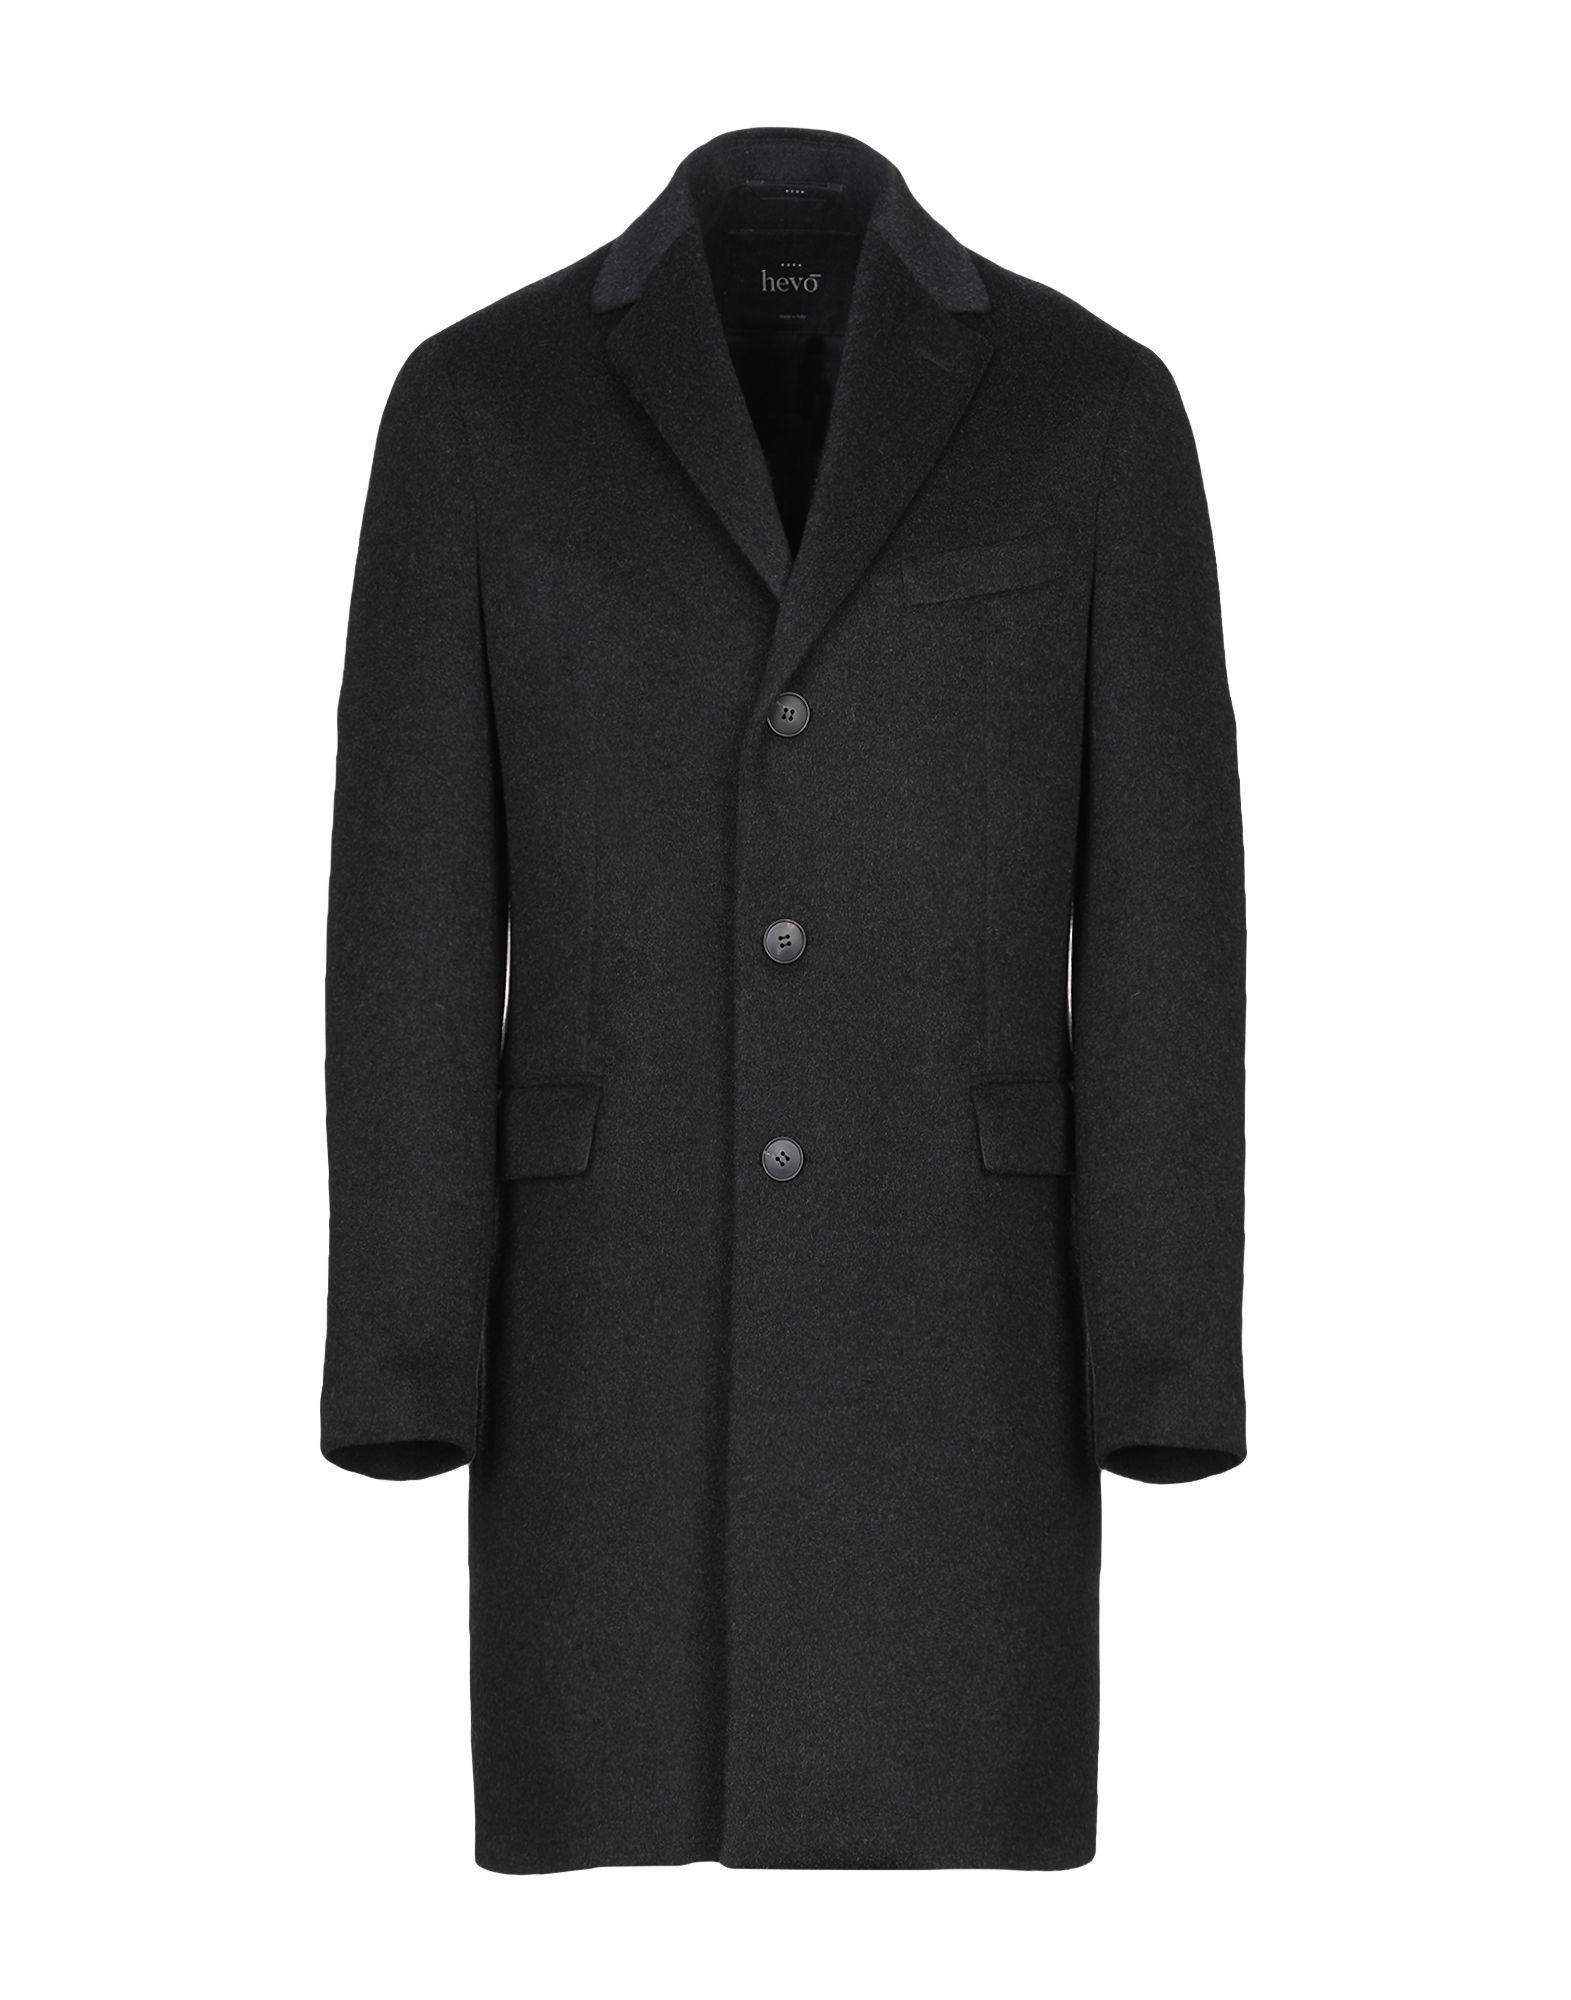 Hevò Cashmere Coat in Lead (Black) for Men - Lyst